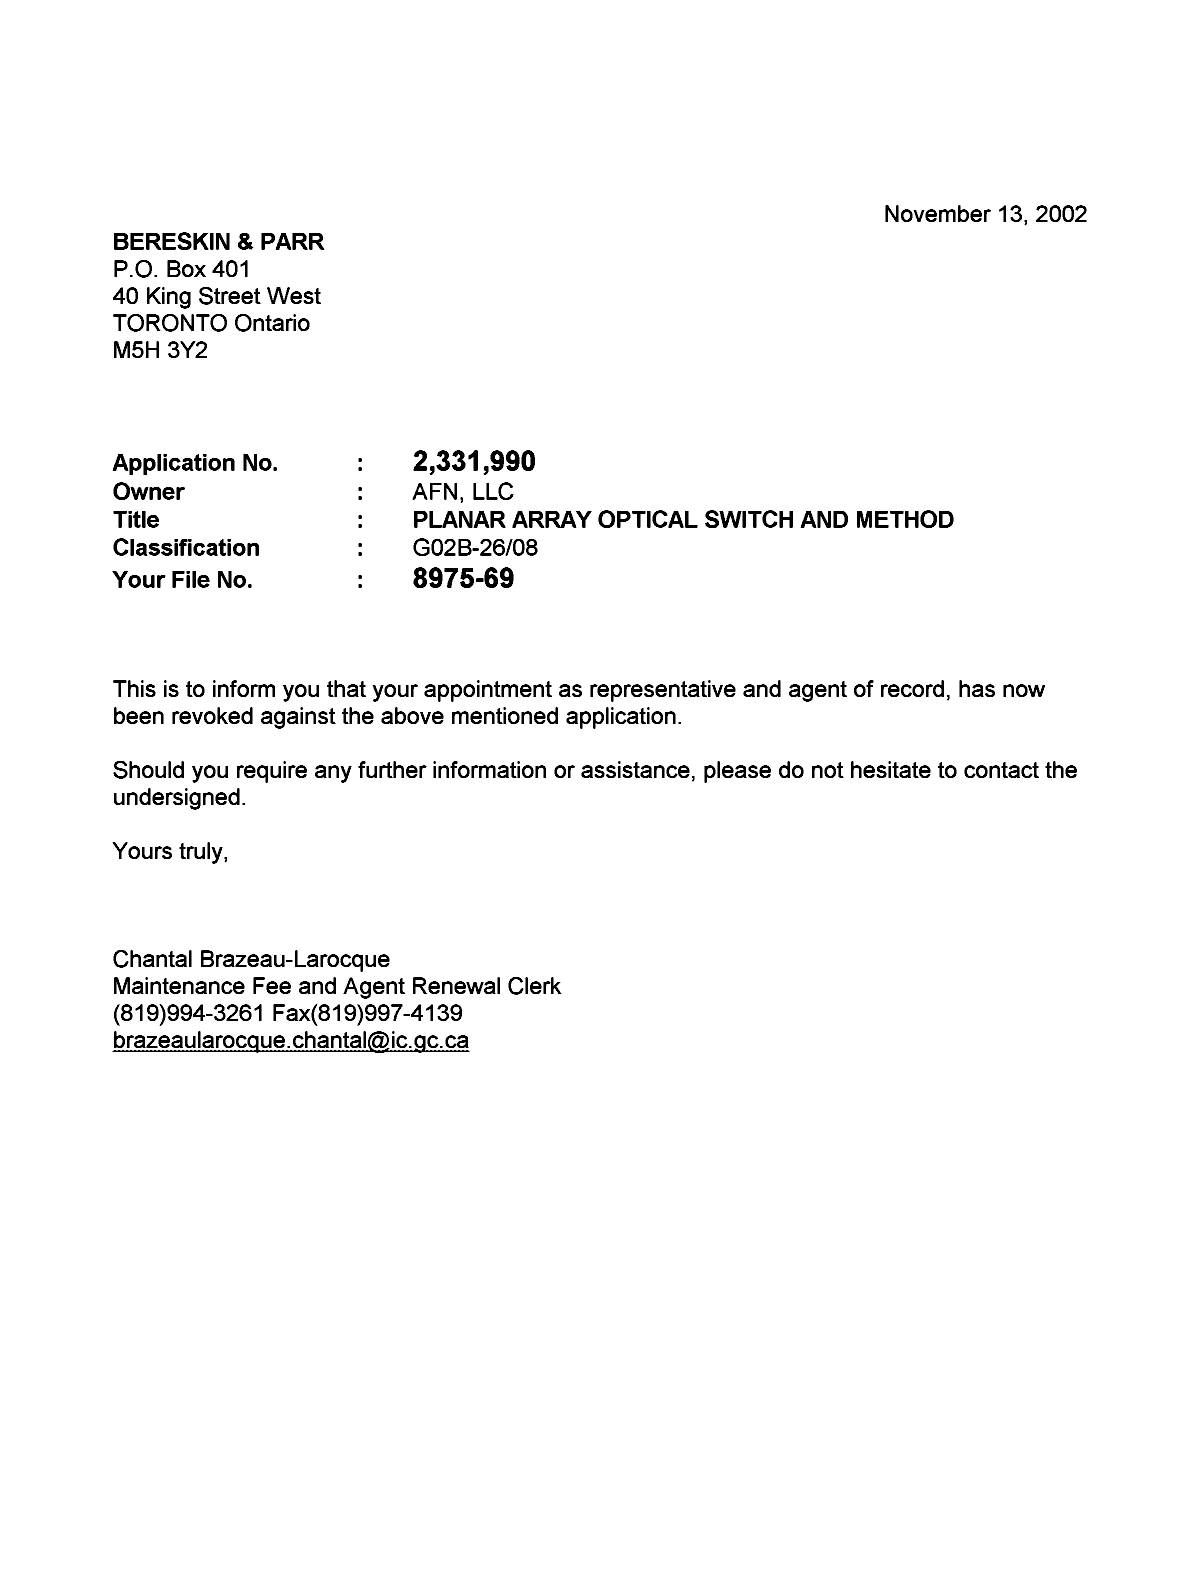 Canadian Patent Document 2331990. Correspondence 20021113. Image 1 of 1